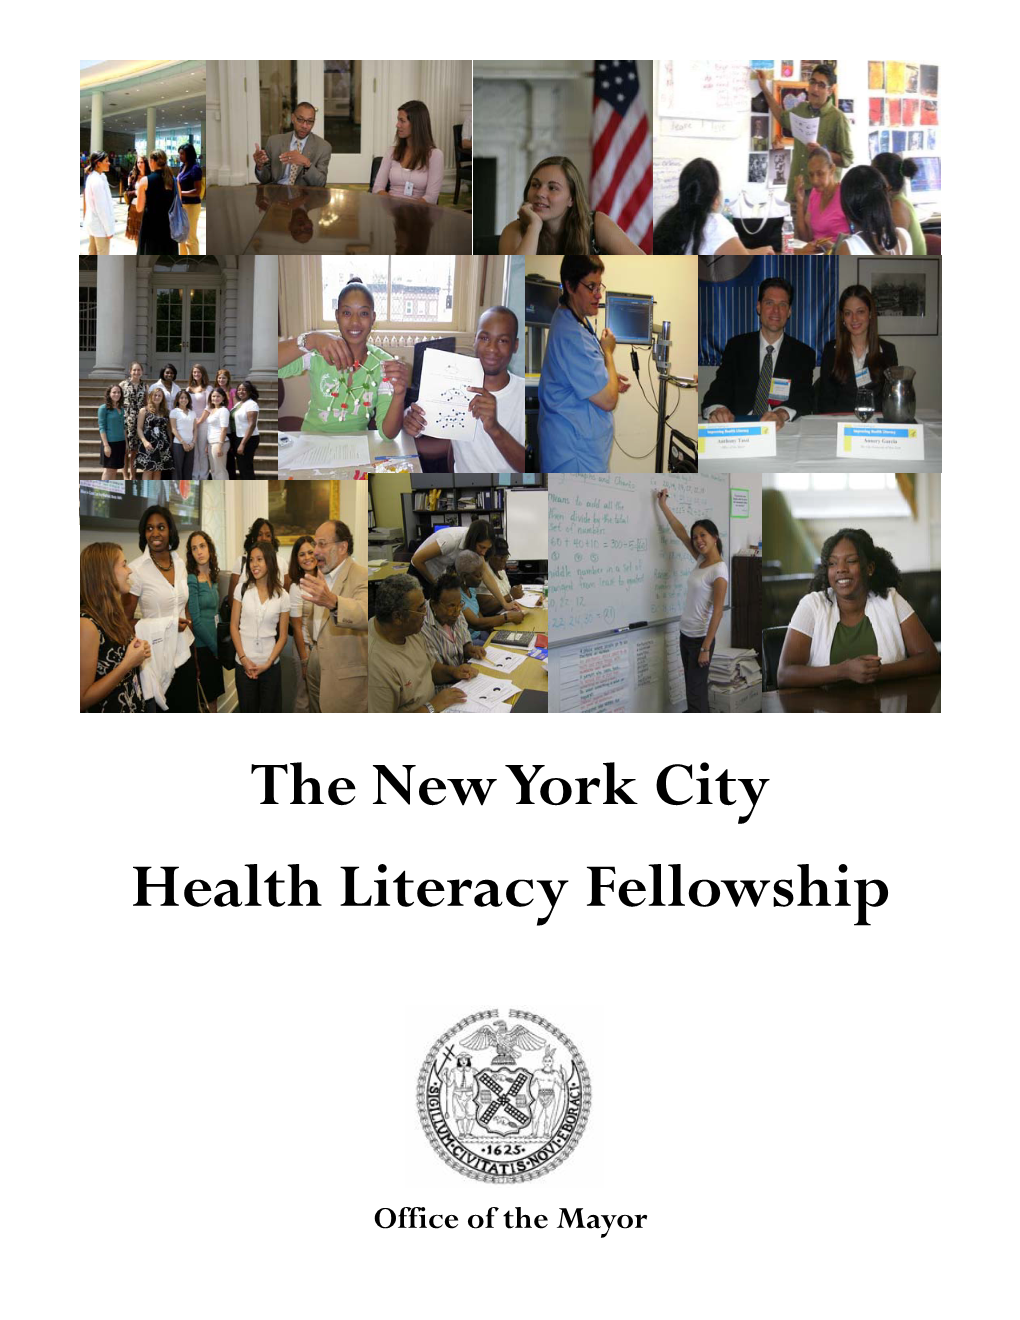 The New York City Health Literacy Fellowship